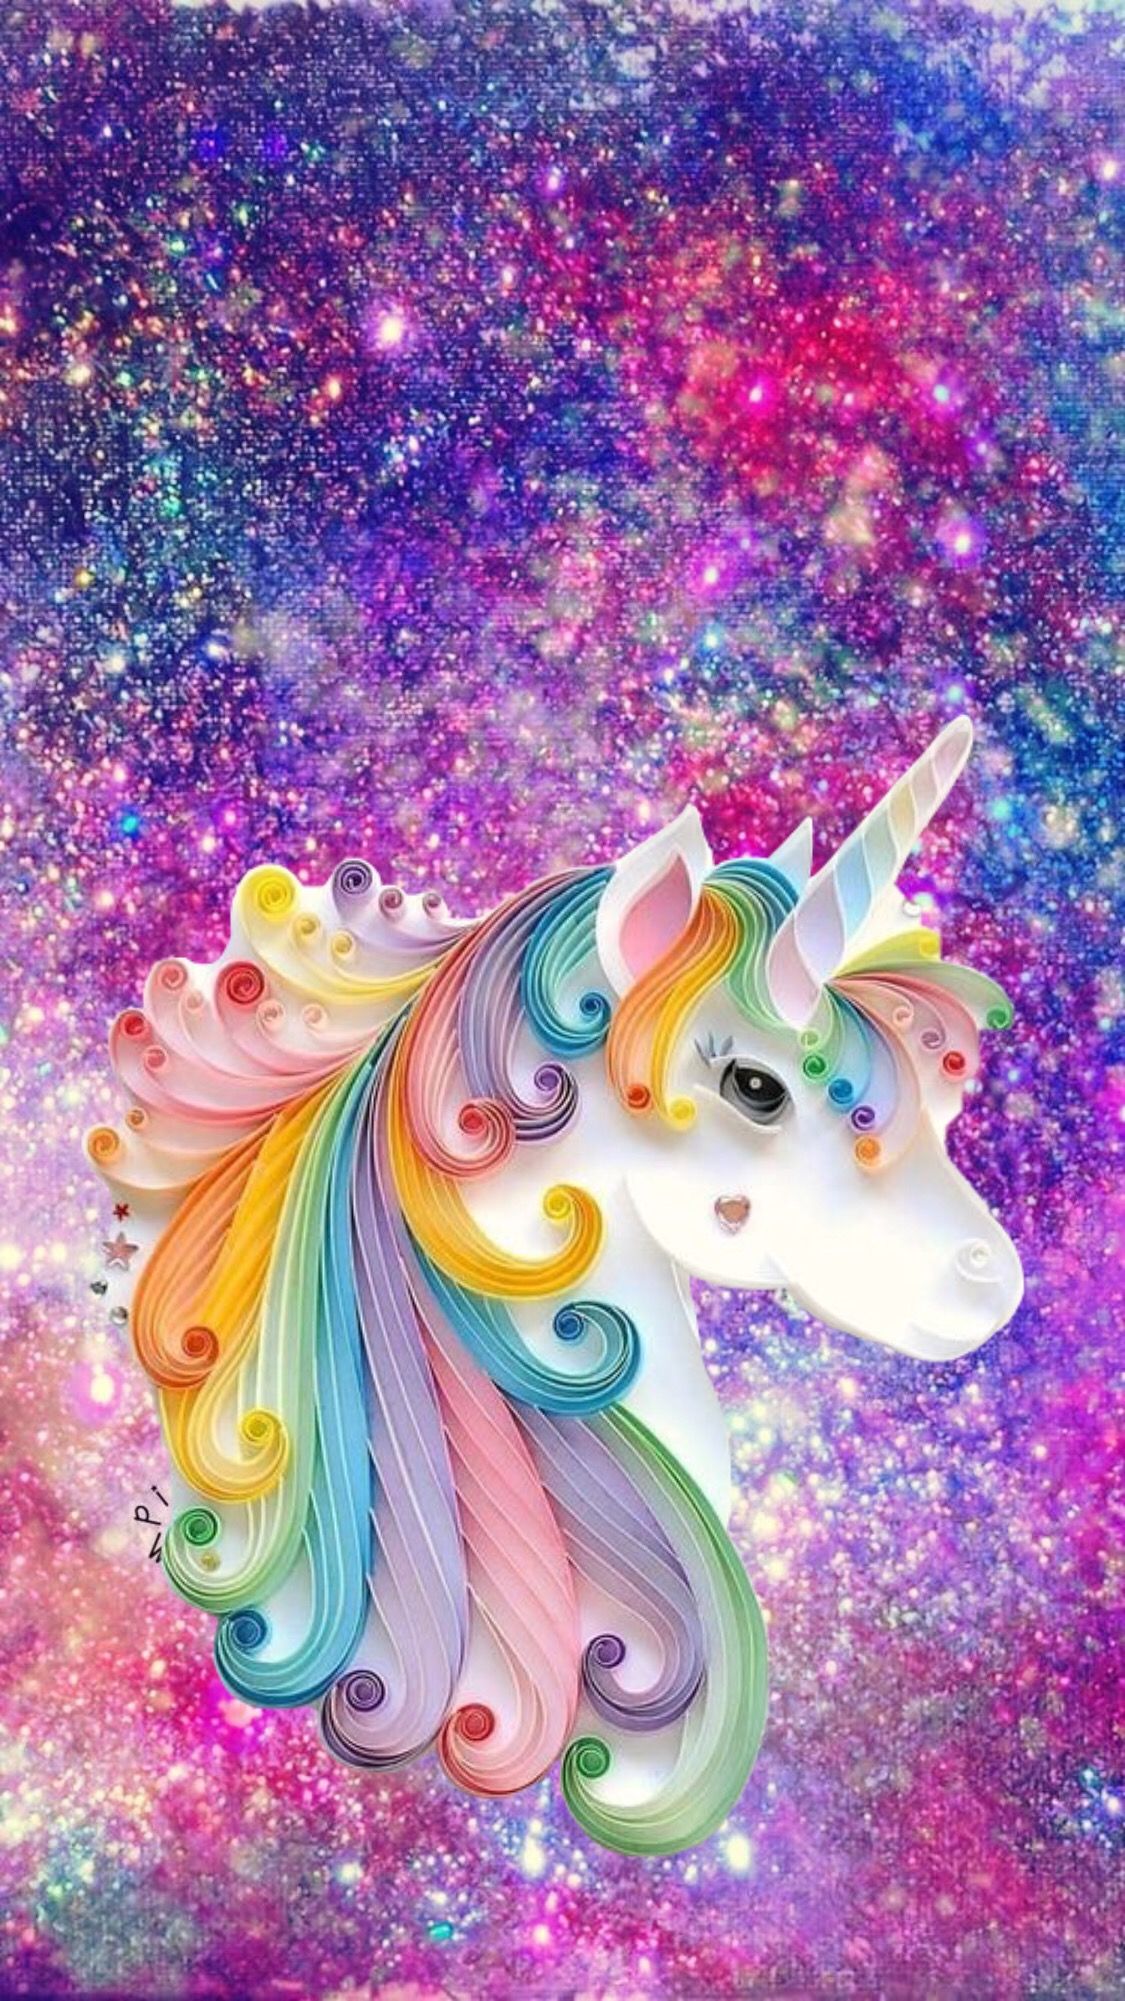 Unicorn with sparkle background .com